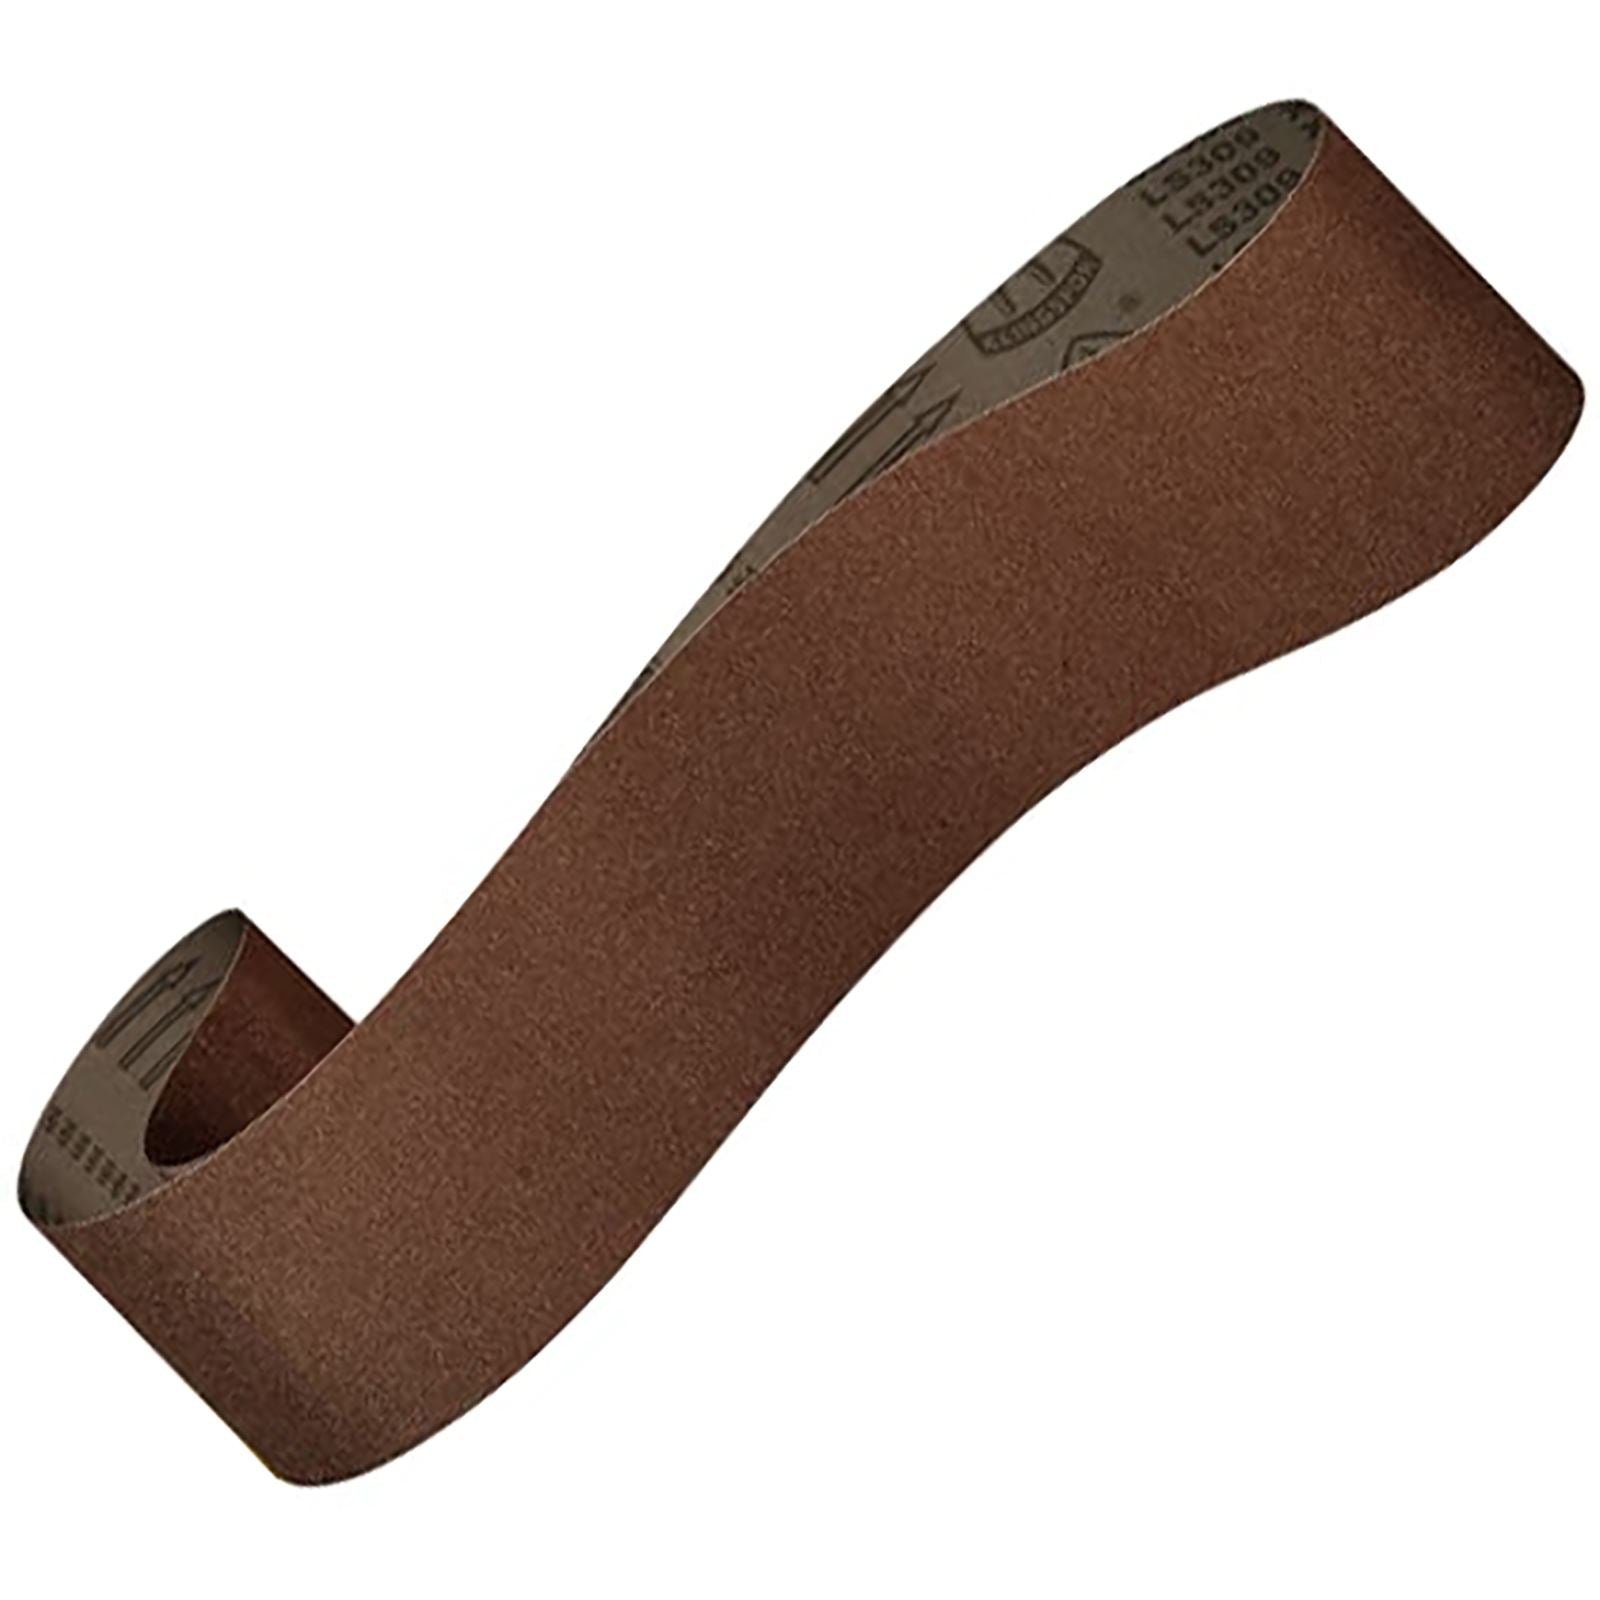 Klingspor Abrasive Sanding Belt 150mm x 1220mm LS309X for Belt Sanders